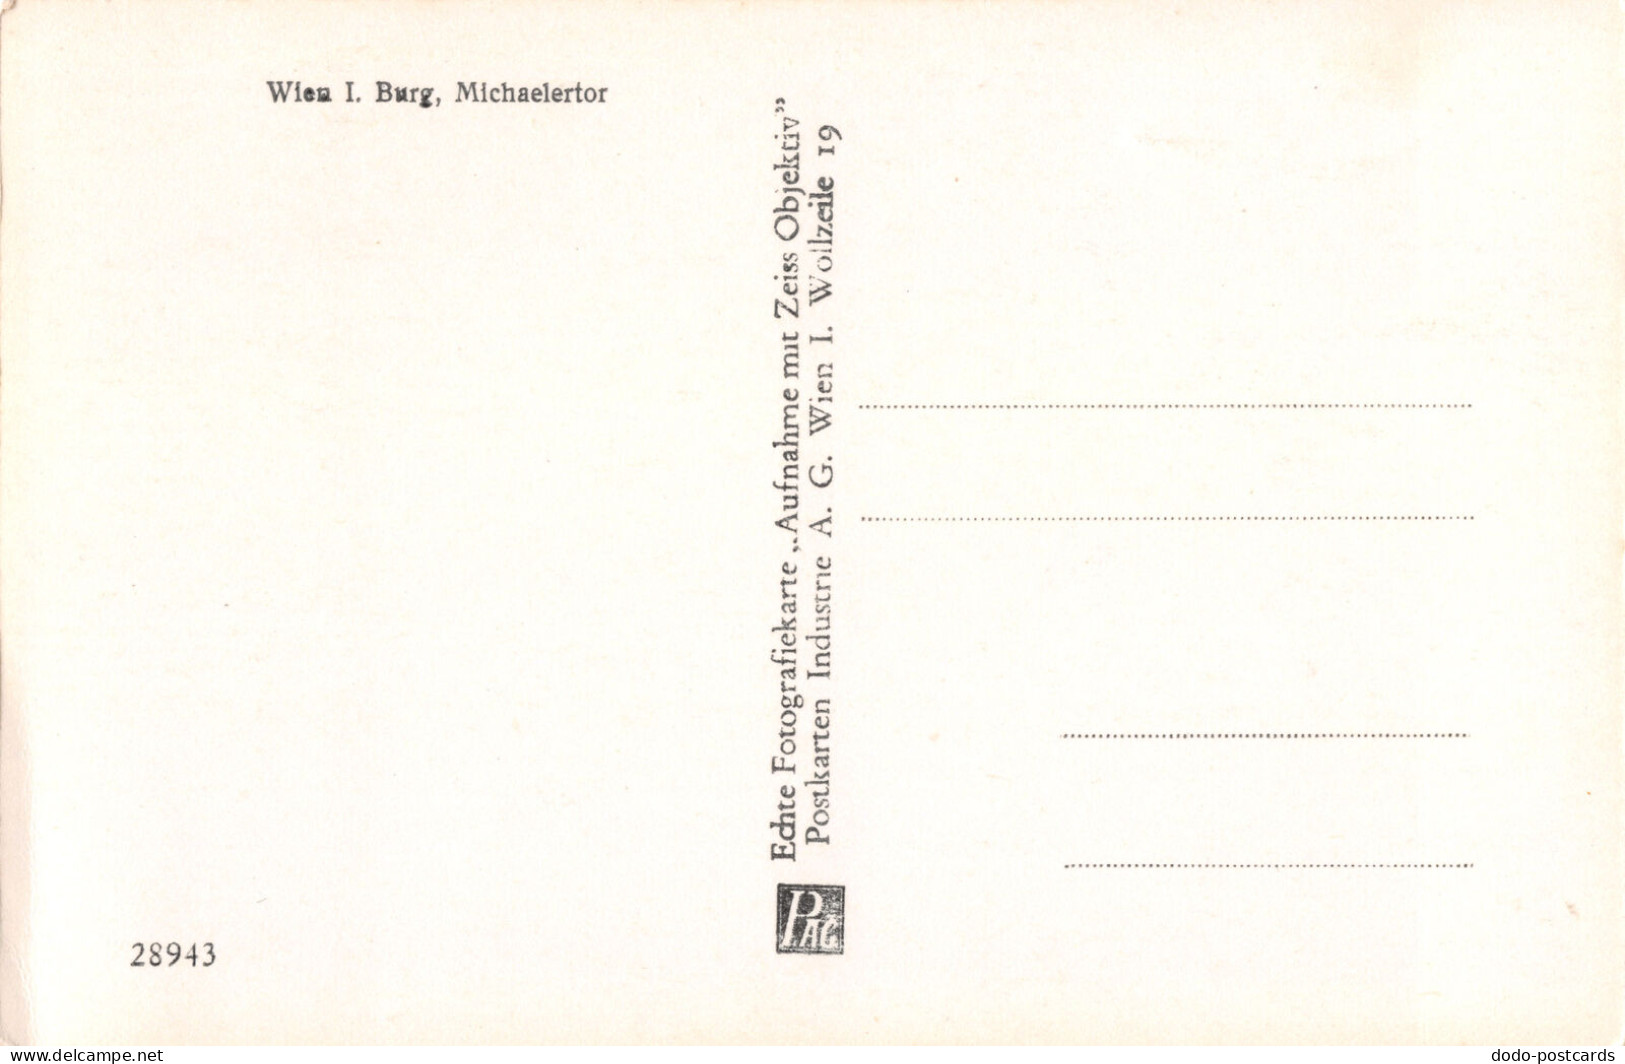 R332369 Wien I. Burg Michaelertor. 28943. Postkarten Industrie A. G. PAG. Zeiss - Monde